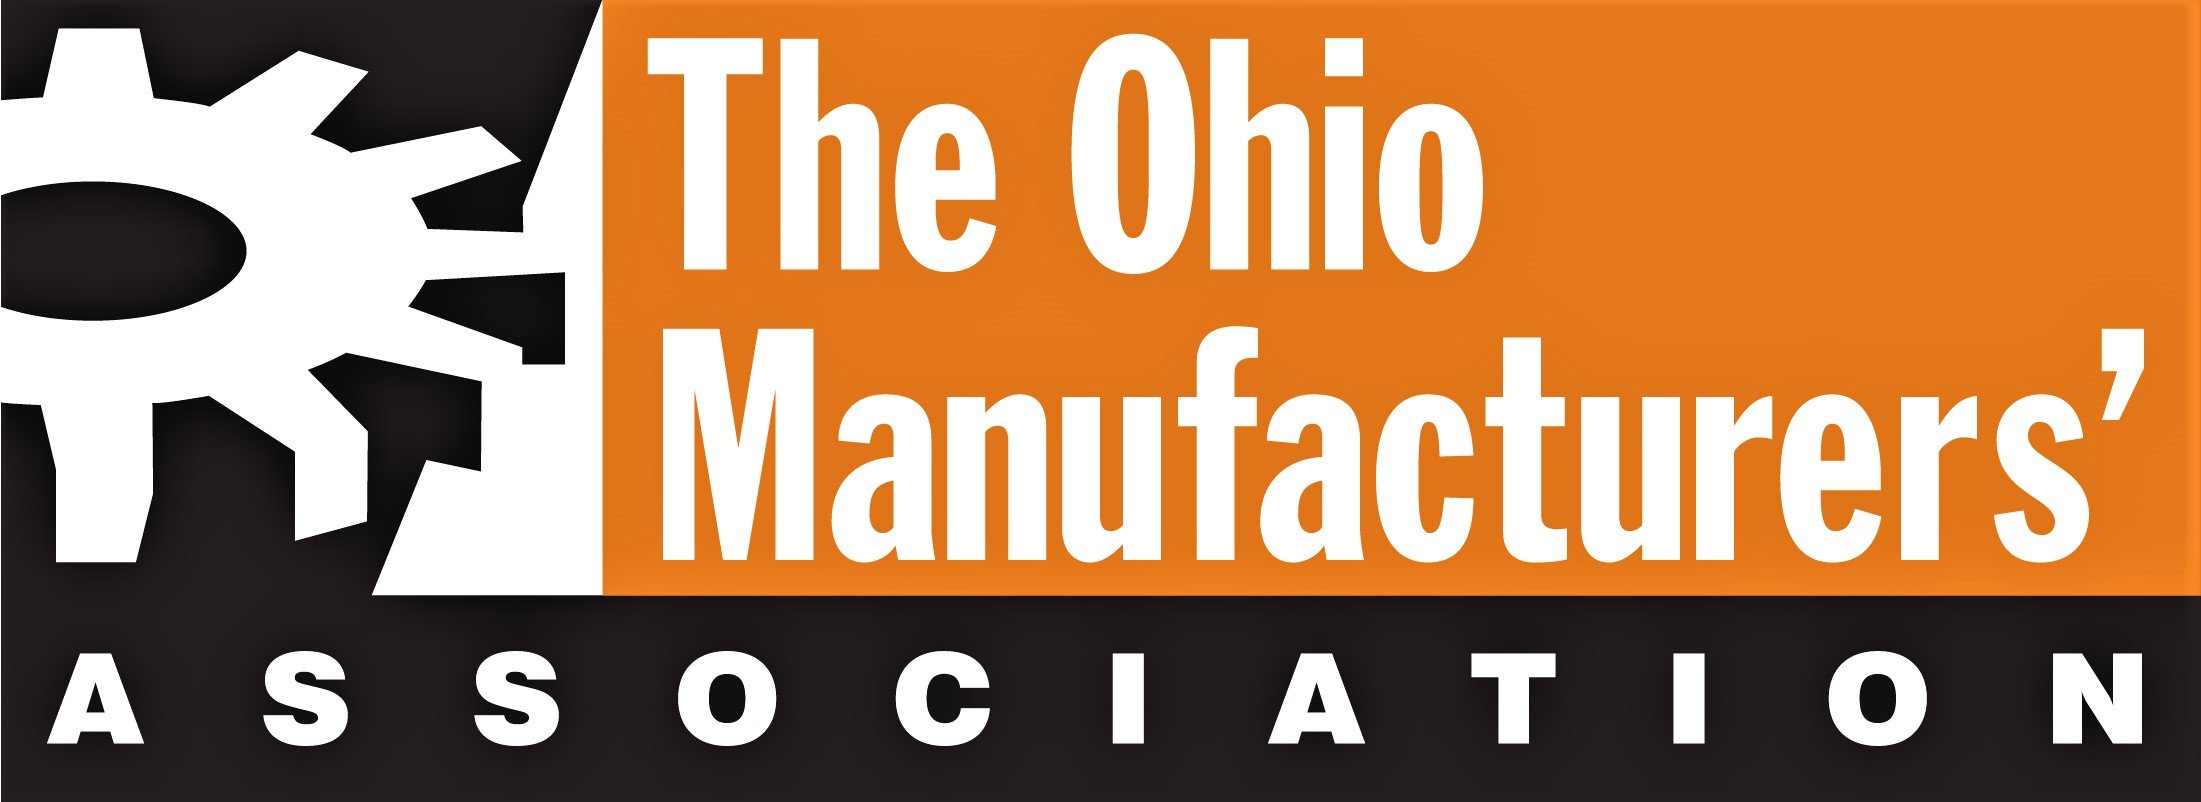 Ohio Manufacturers Association logo